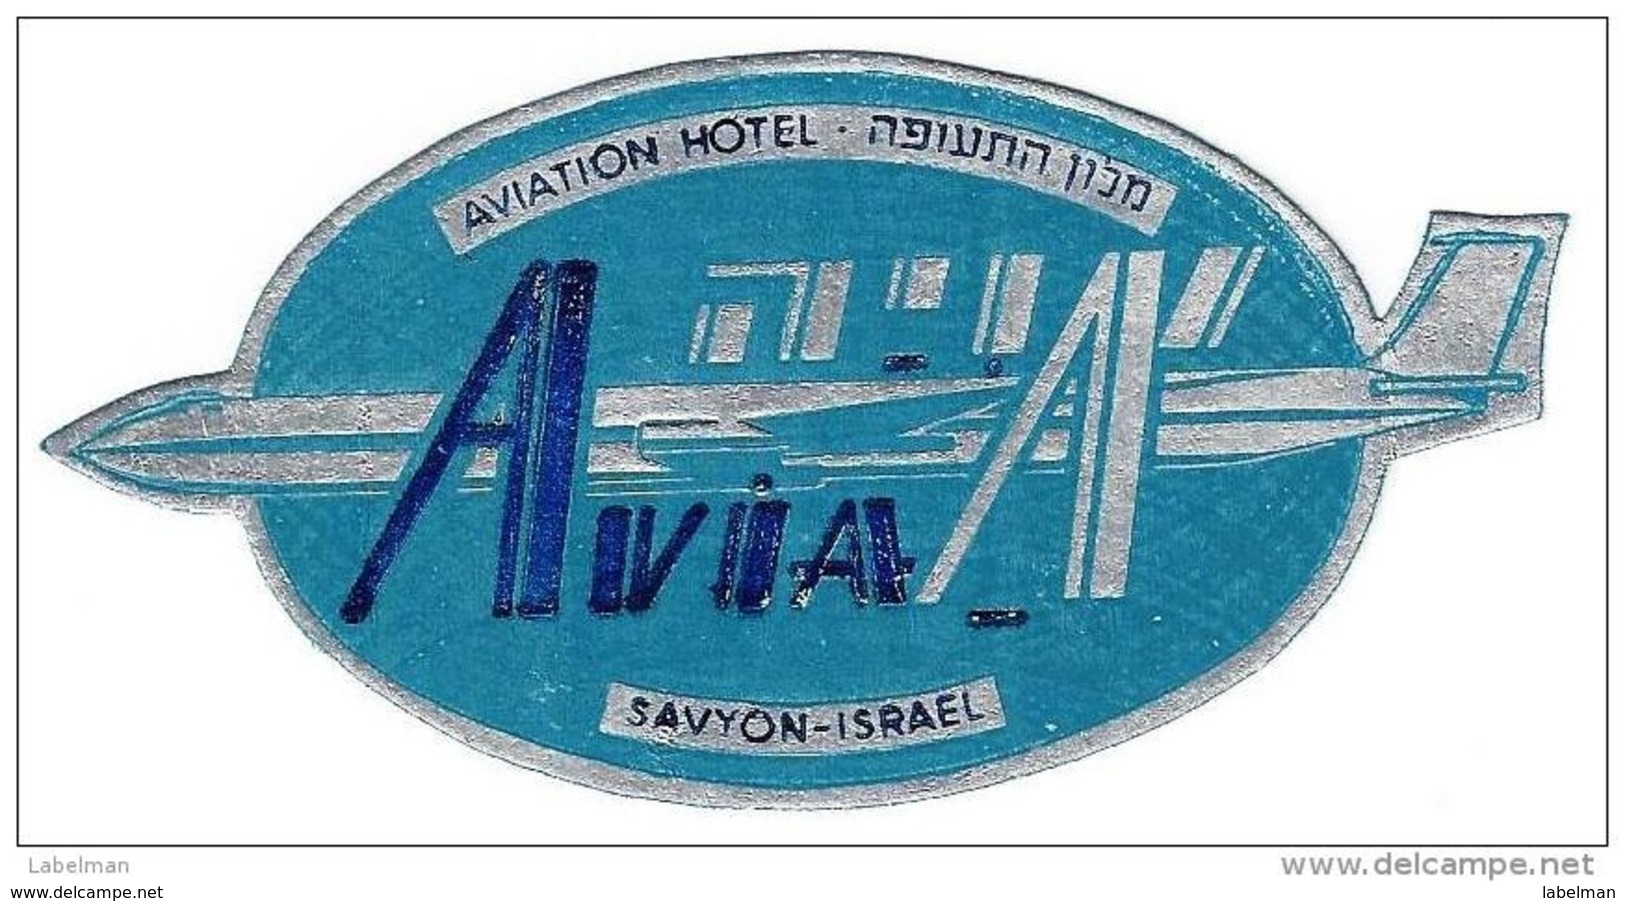 HOTEL MOTEL PENSION RESIDENCE AVIA AIRPORT PLANE TEL AVIV ISRAEL TAG STICKER DECAL LUGGAGE LABEL ETIQUETTE AUFKLEBER - Hotel Labels